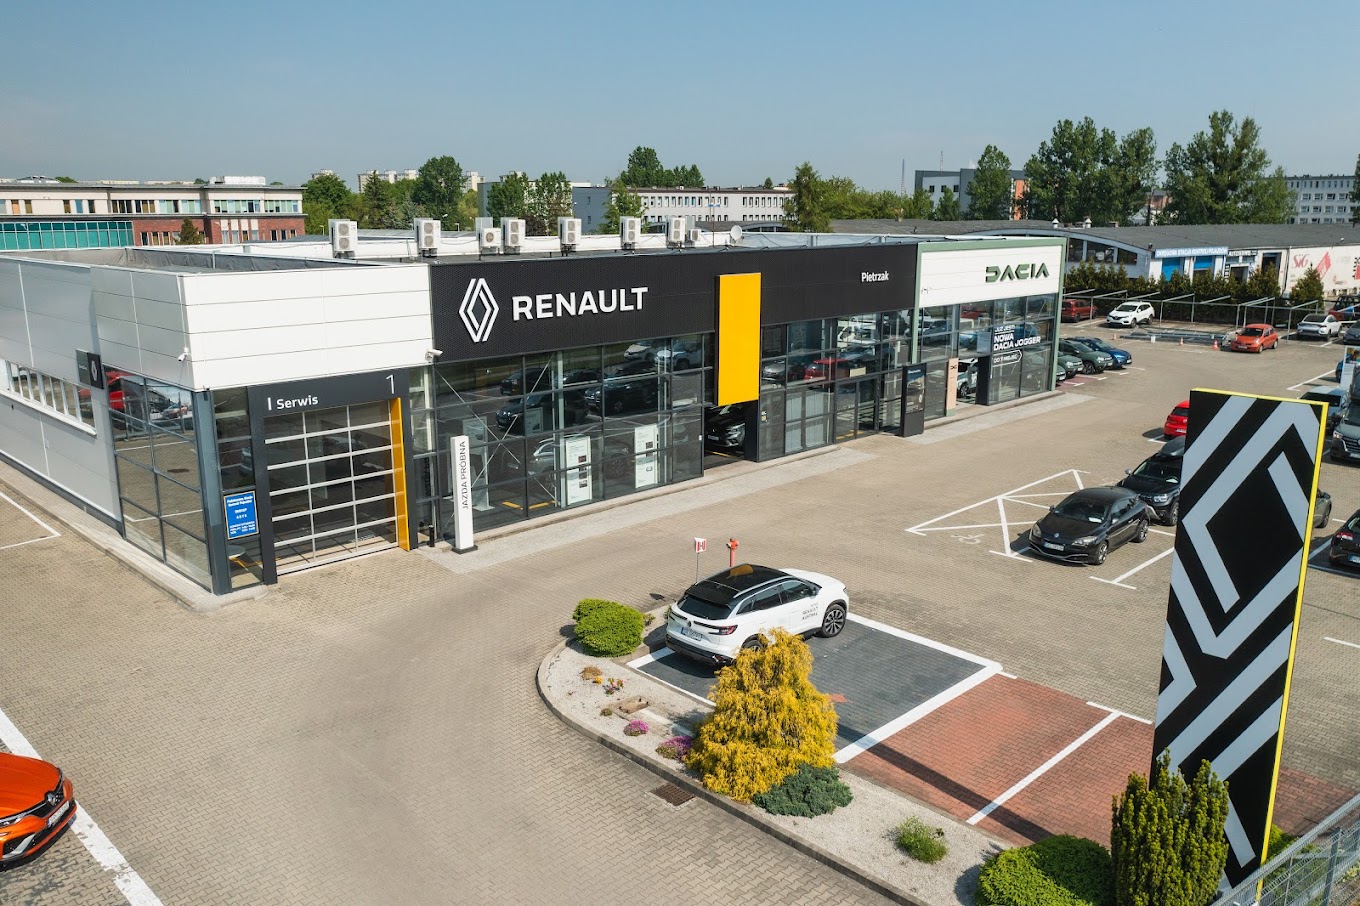 Salony Renault na Śląsku - Grupa Pietrzak 